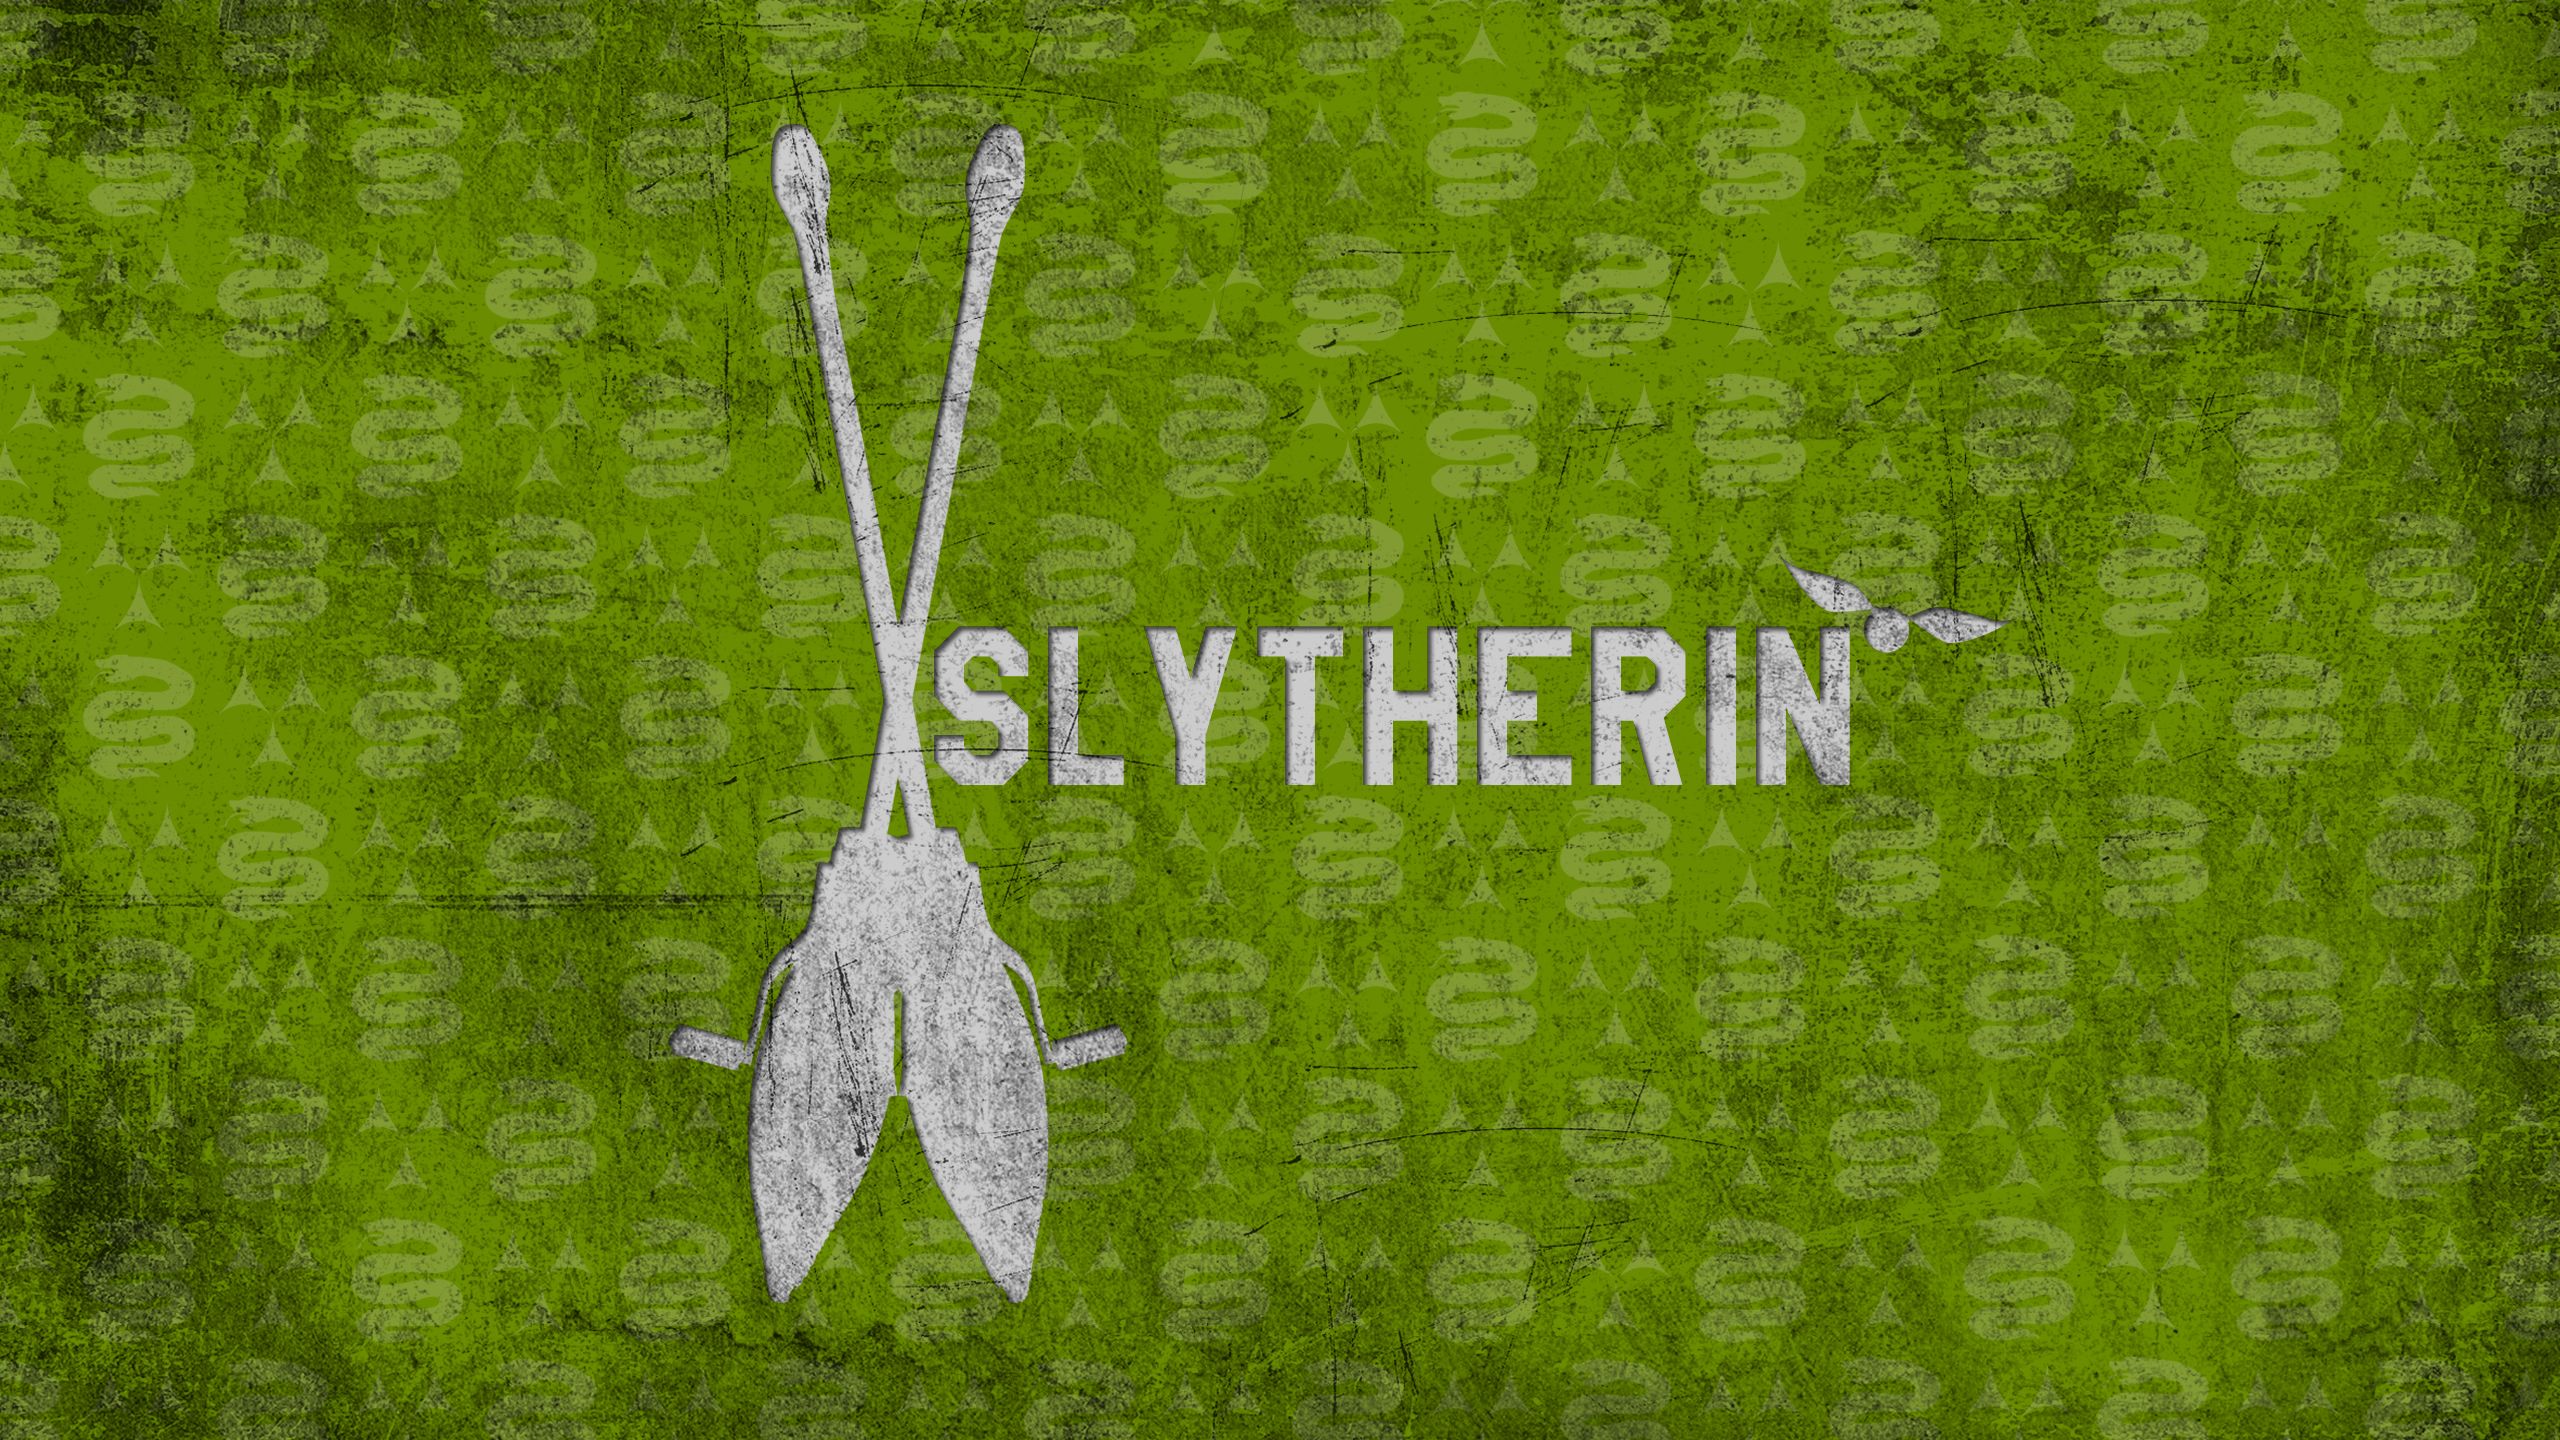 Slytherin Wallpaper Iphone  Live Wallpaper HD  Harry potter wallpaper Slytherin  wallpaper Slytherin